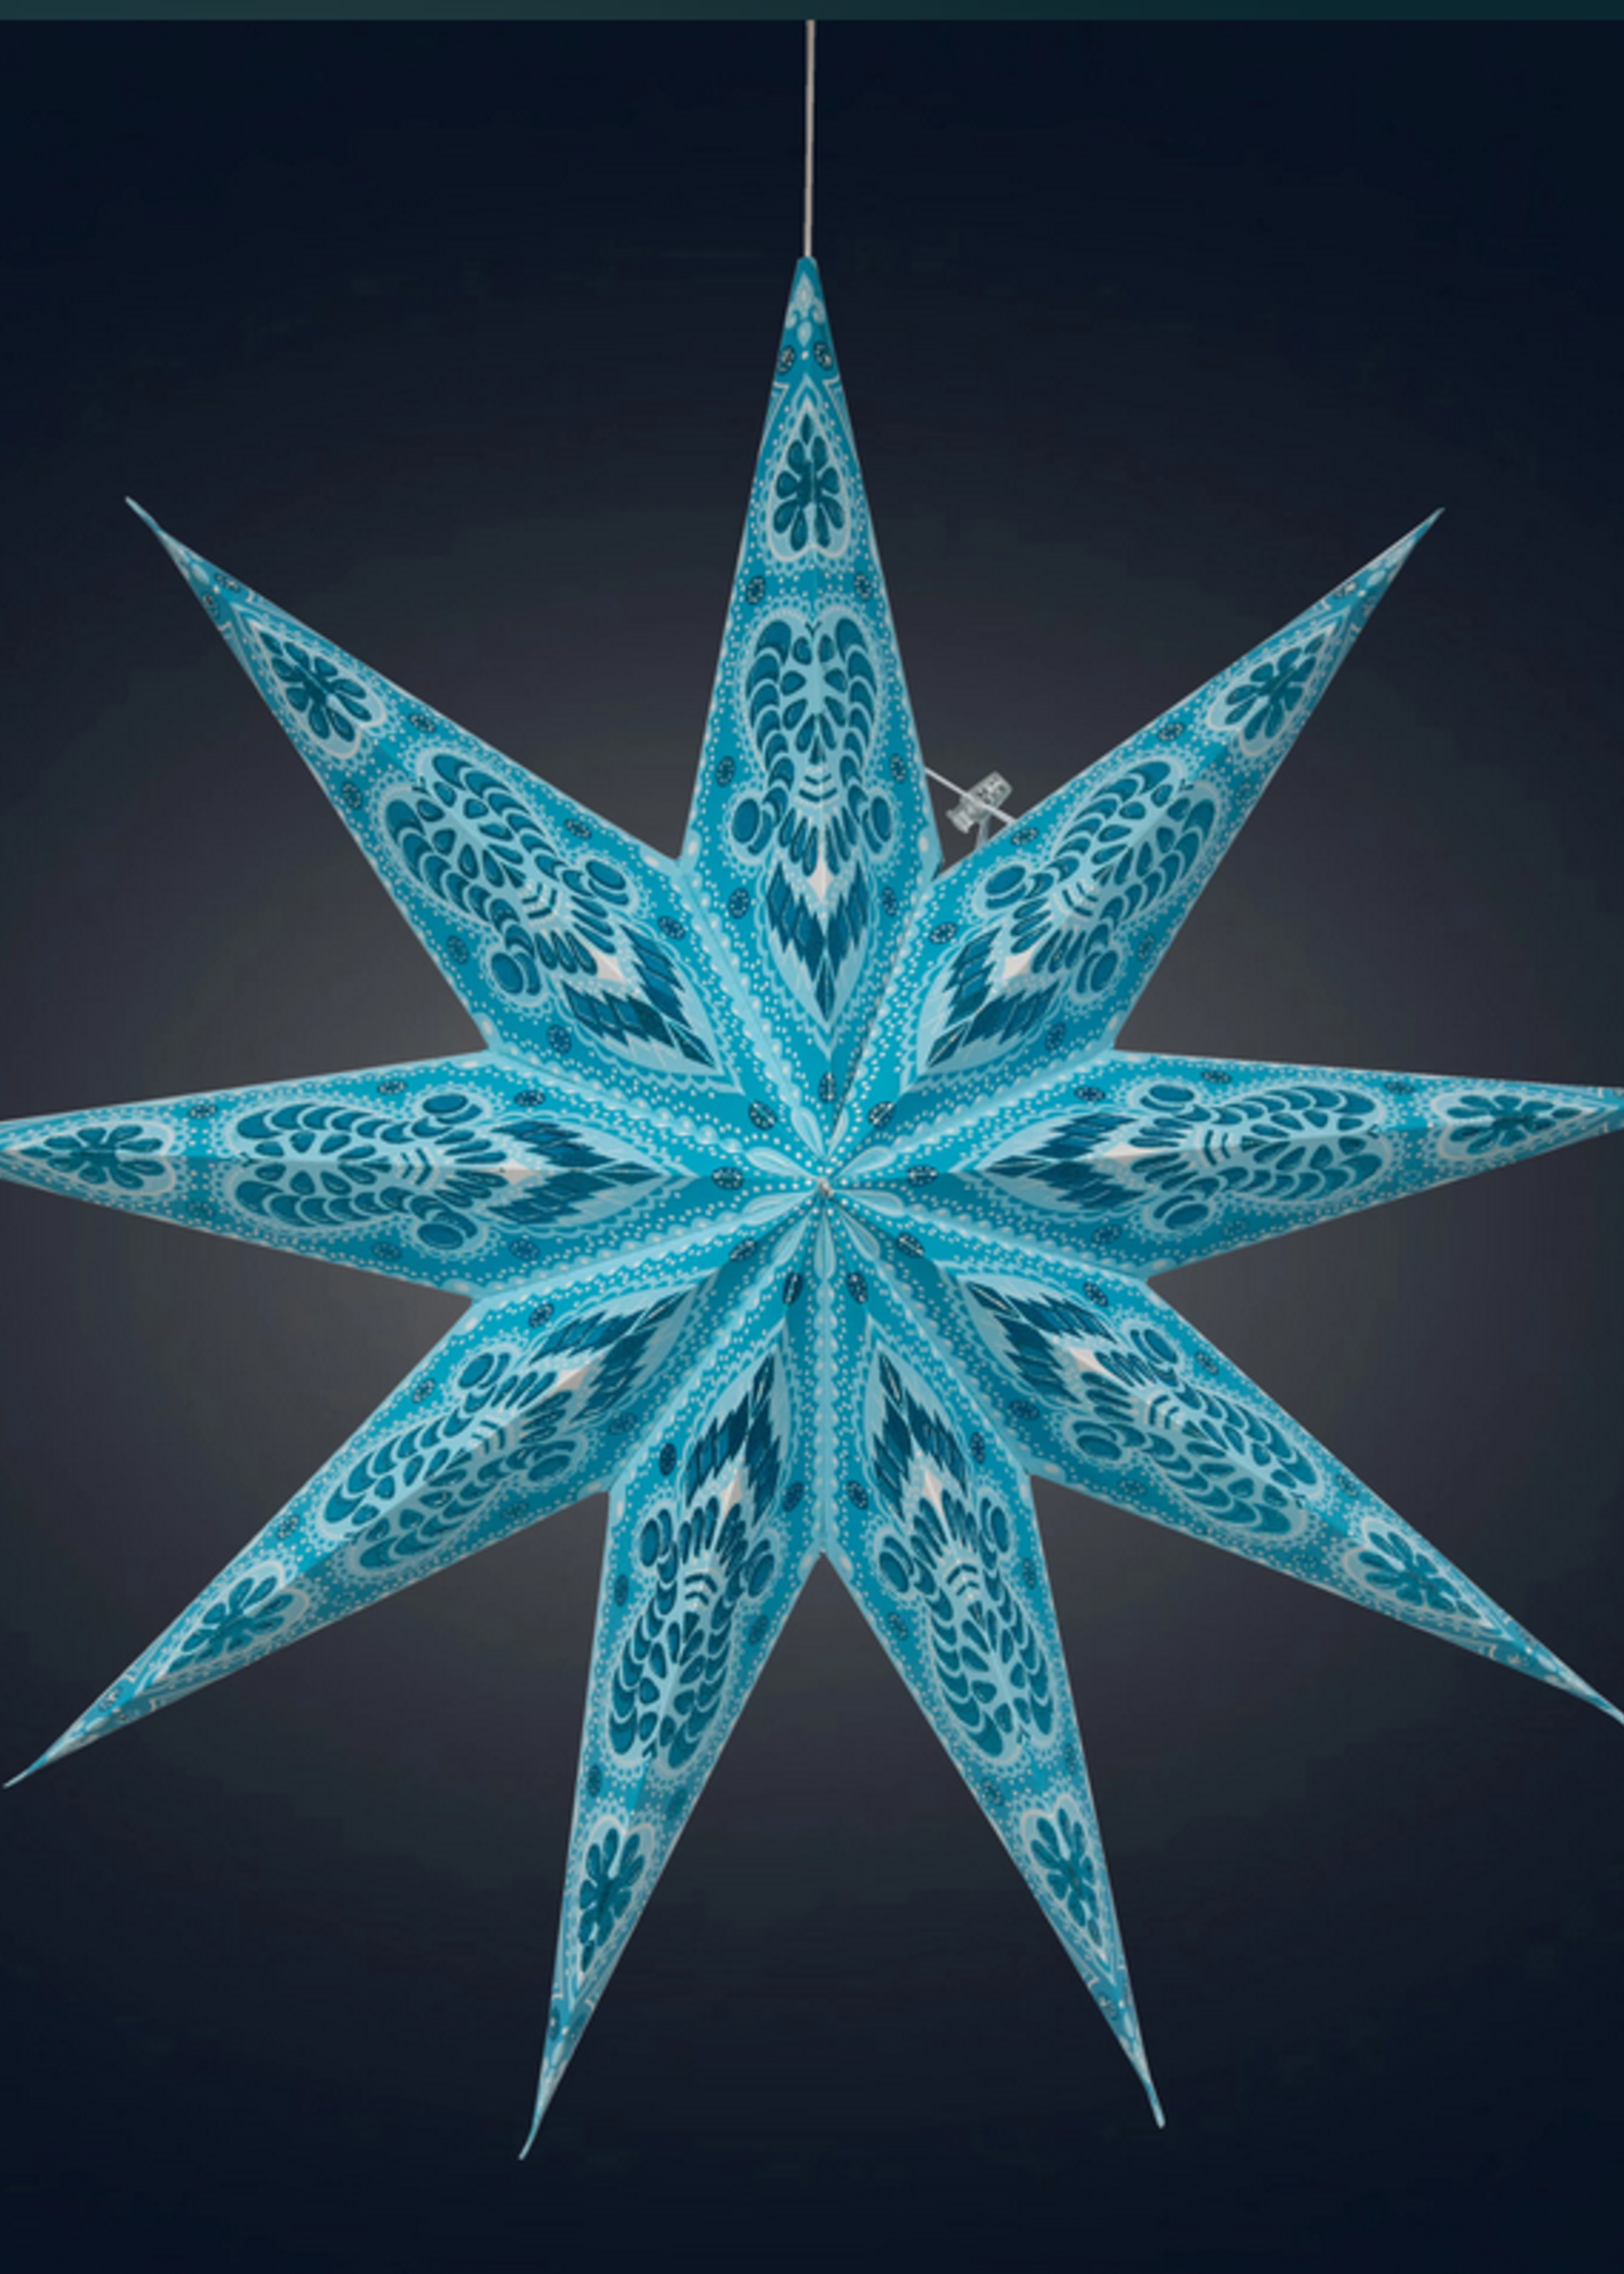 PHOENIX Turquoise Blue & Glitter Star Lantern Light